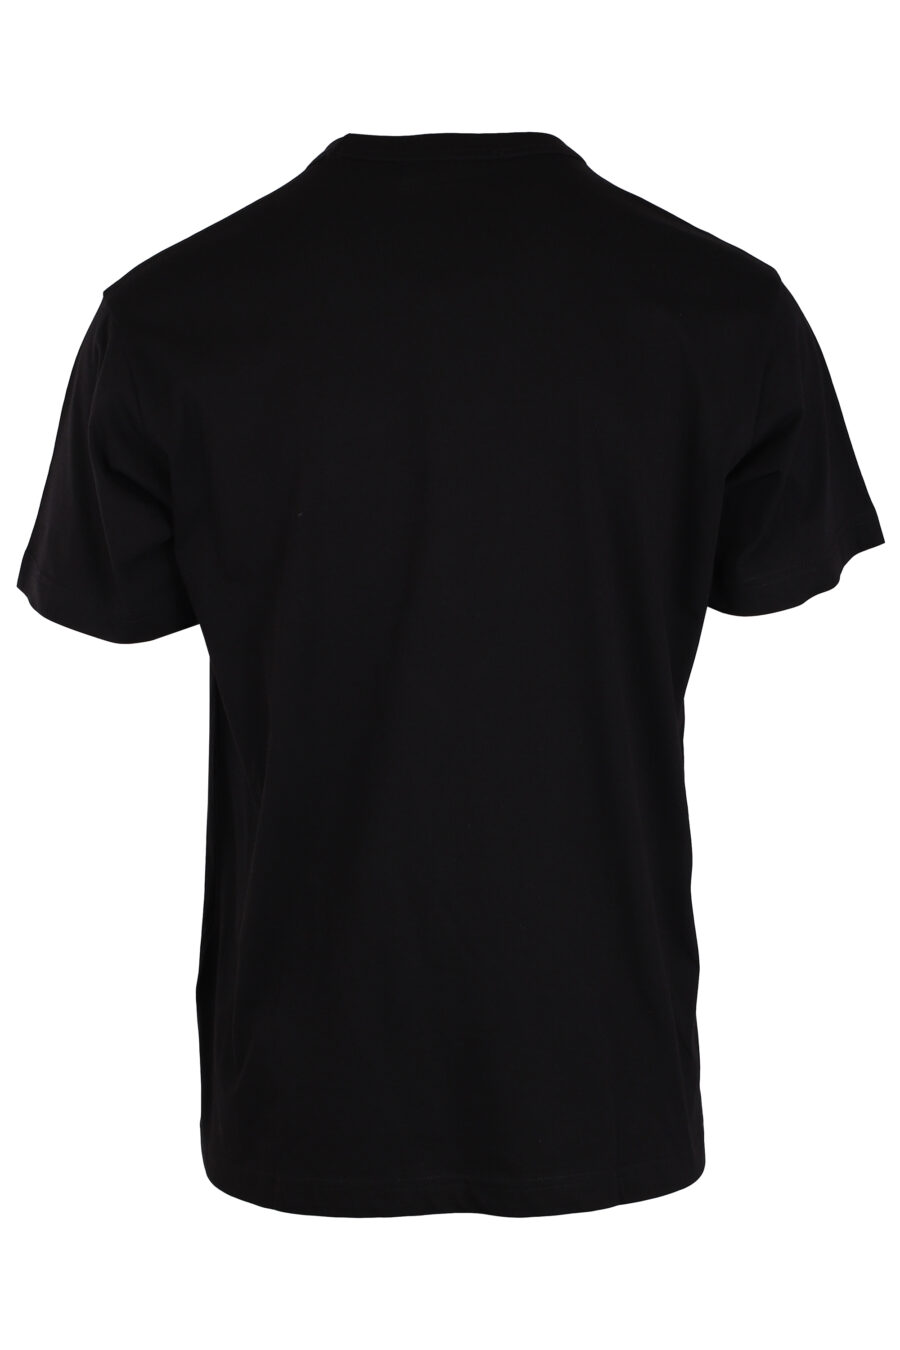 T-Shirt schwarz mit großem orangefarbenem Logo - IMG 4020